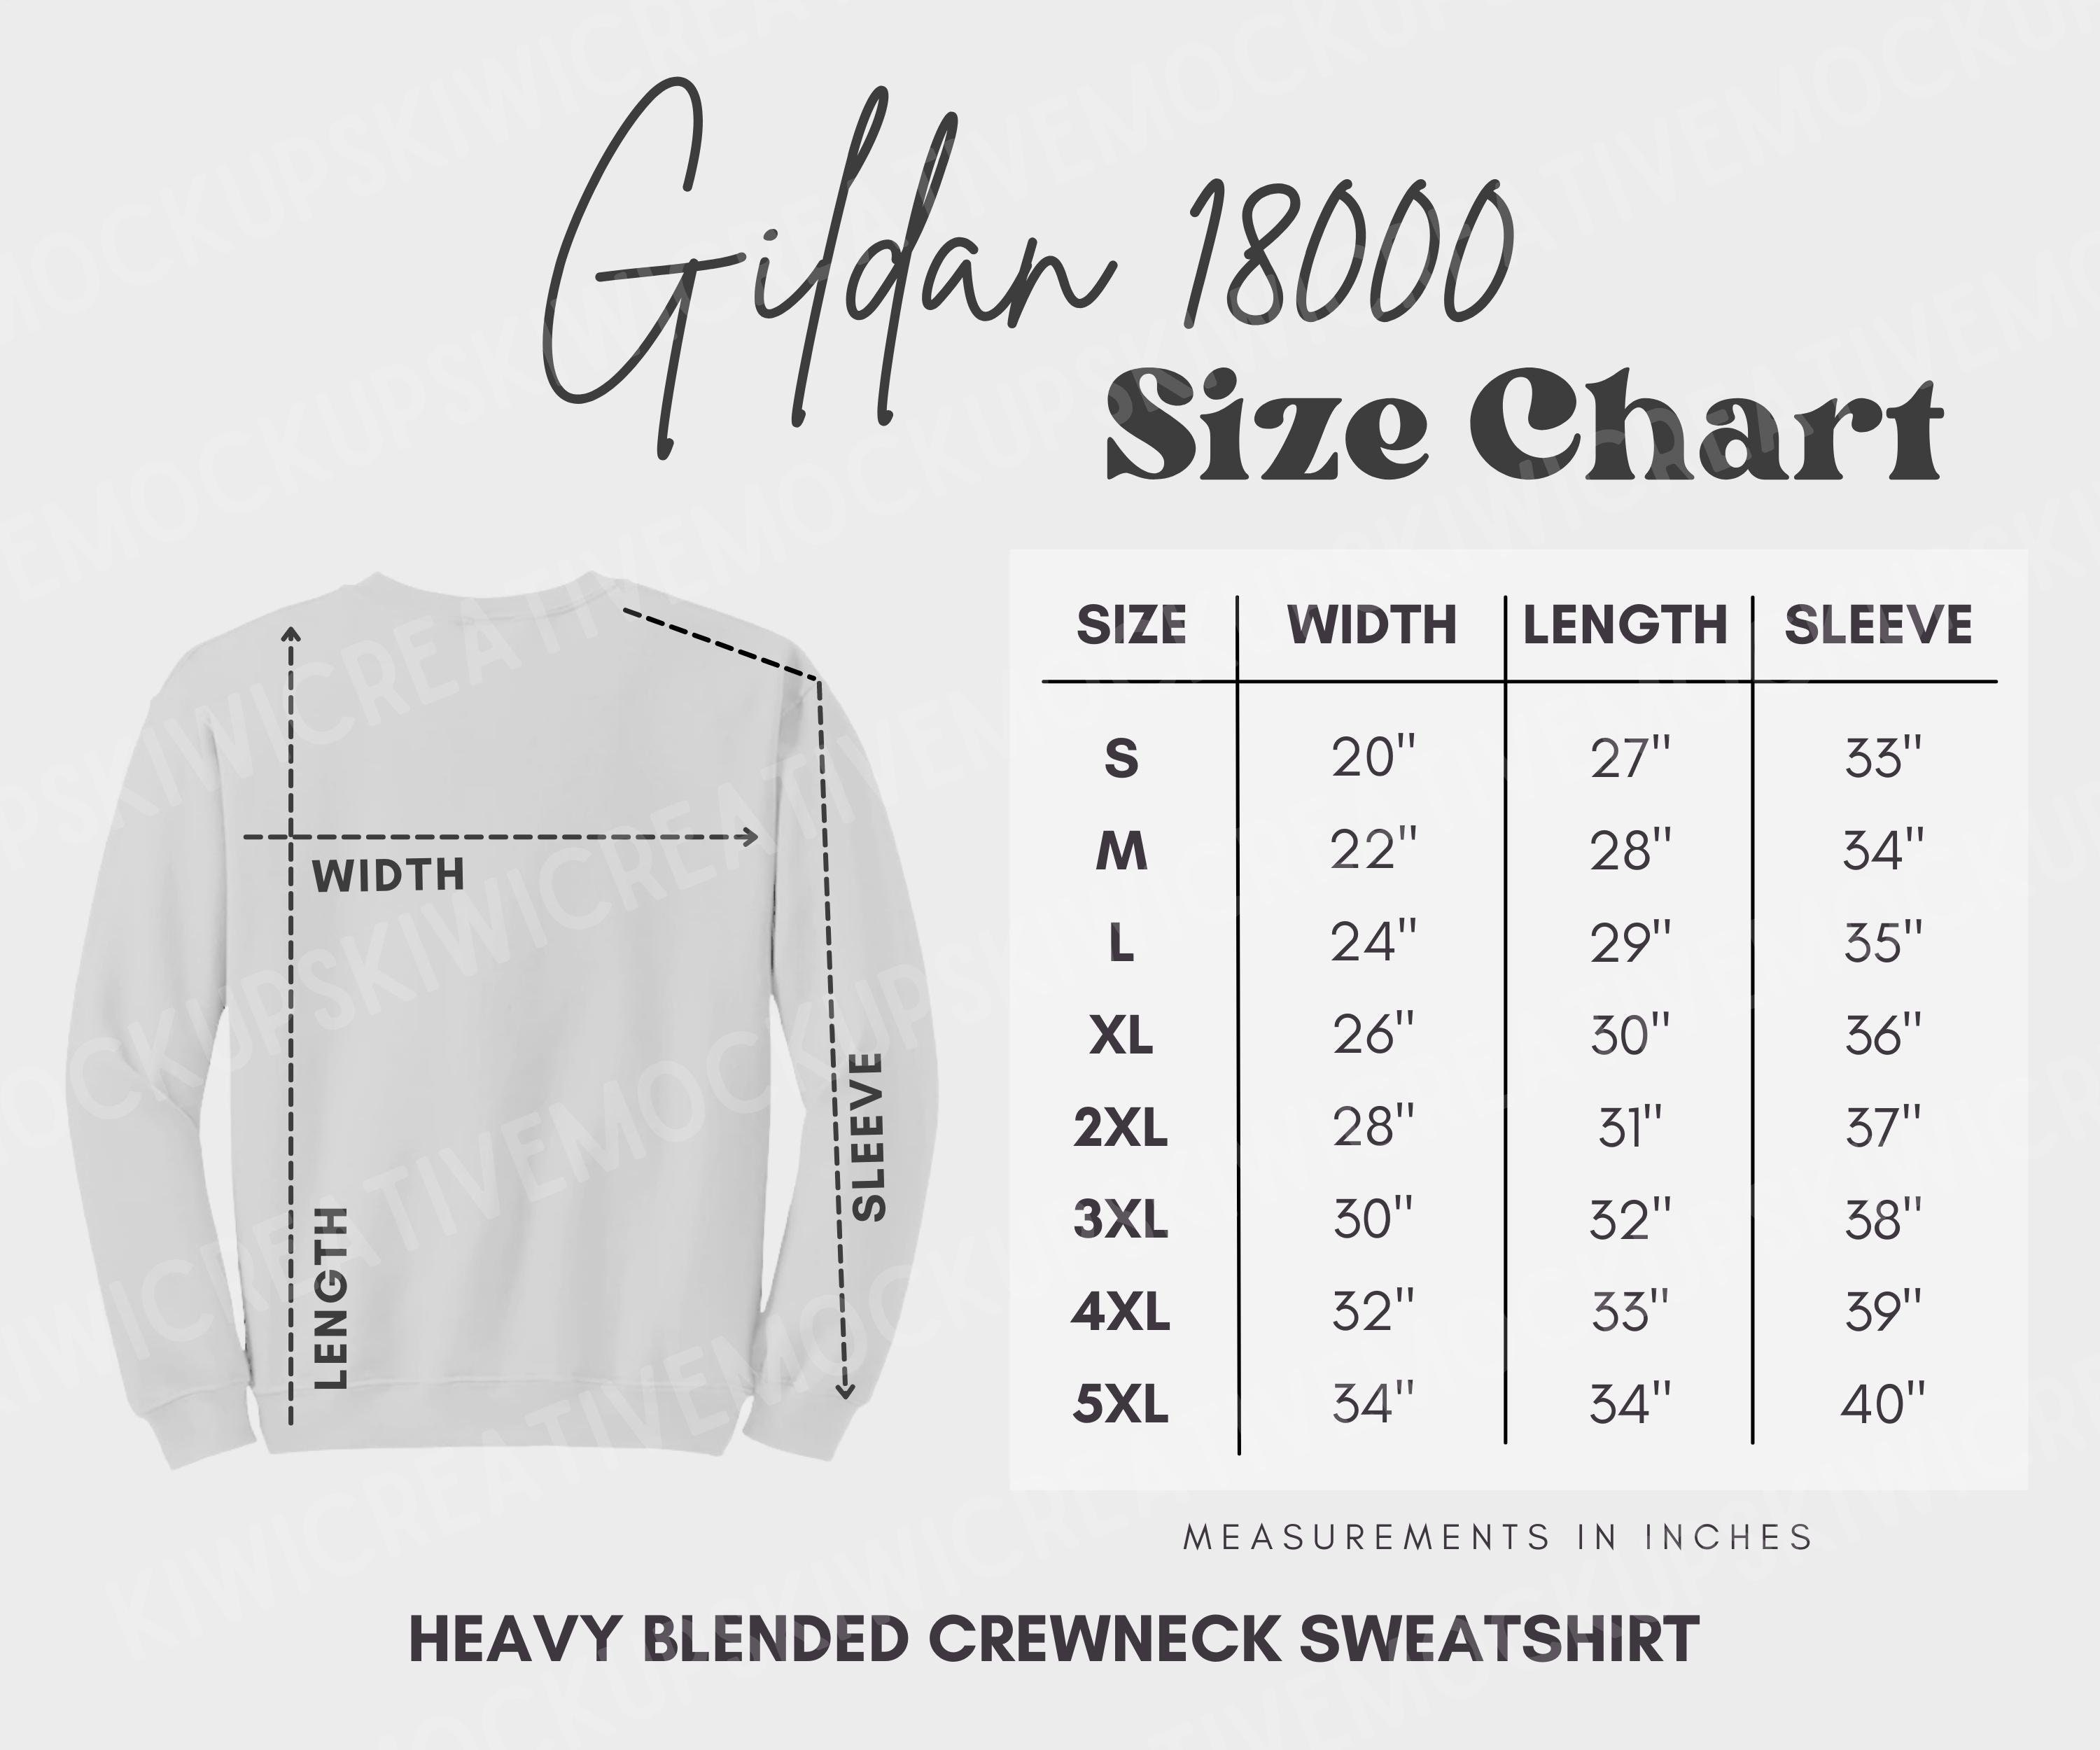 Gildan 18000 Size Chart, Heavy Blend Crewneck Sweatshirt Size